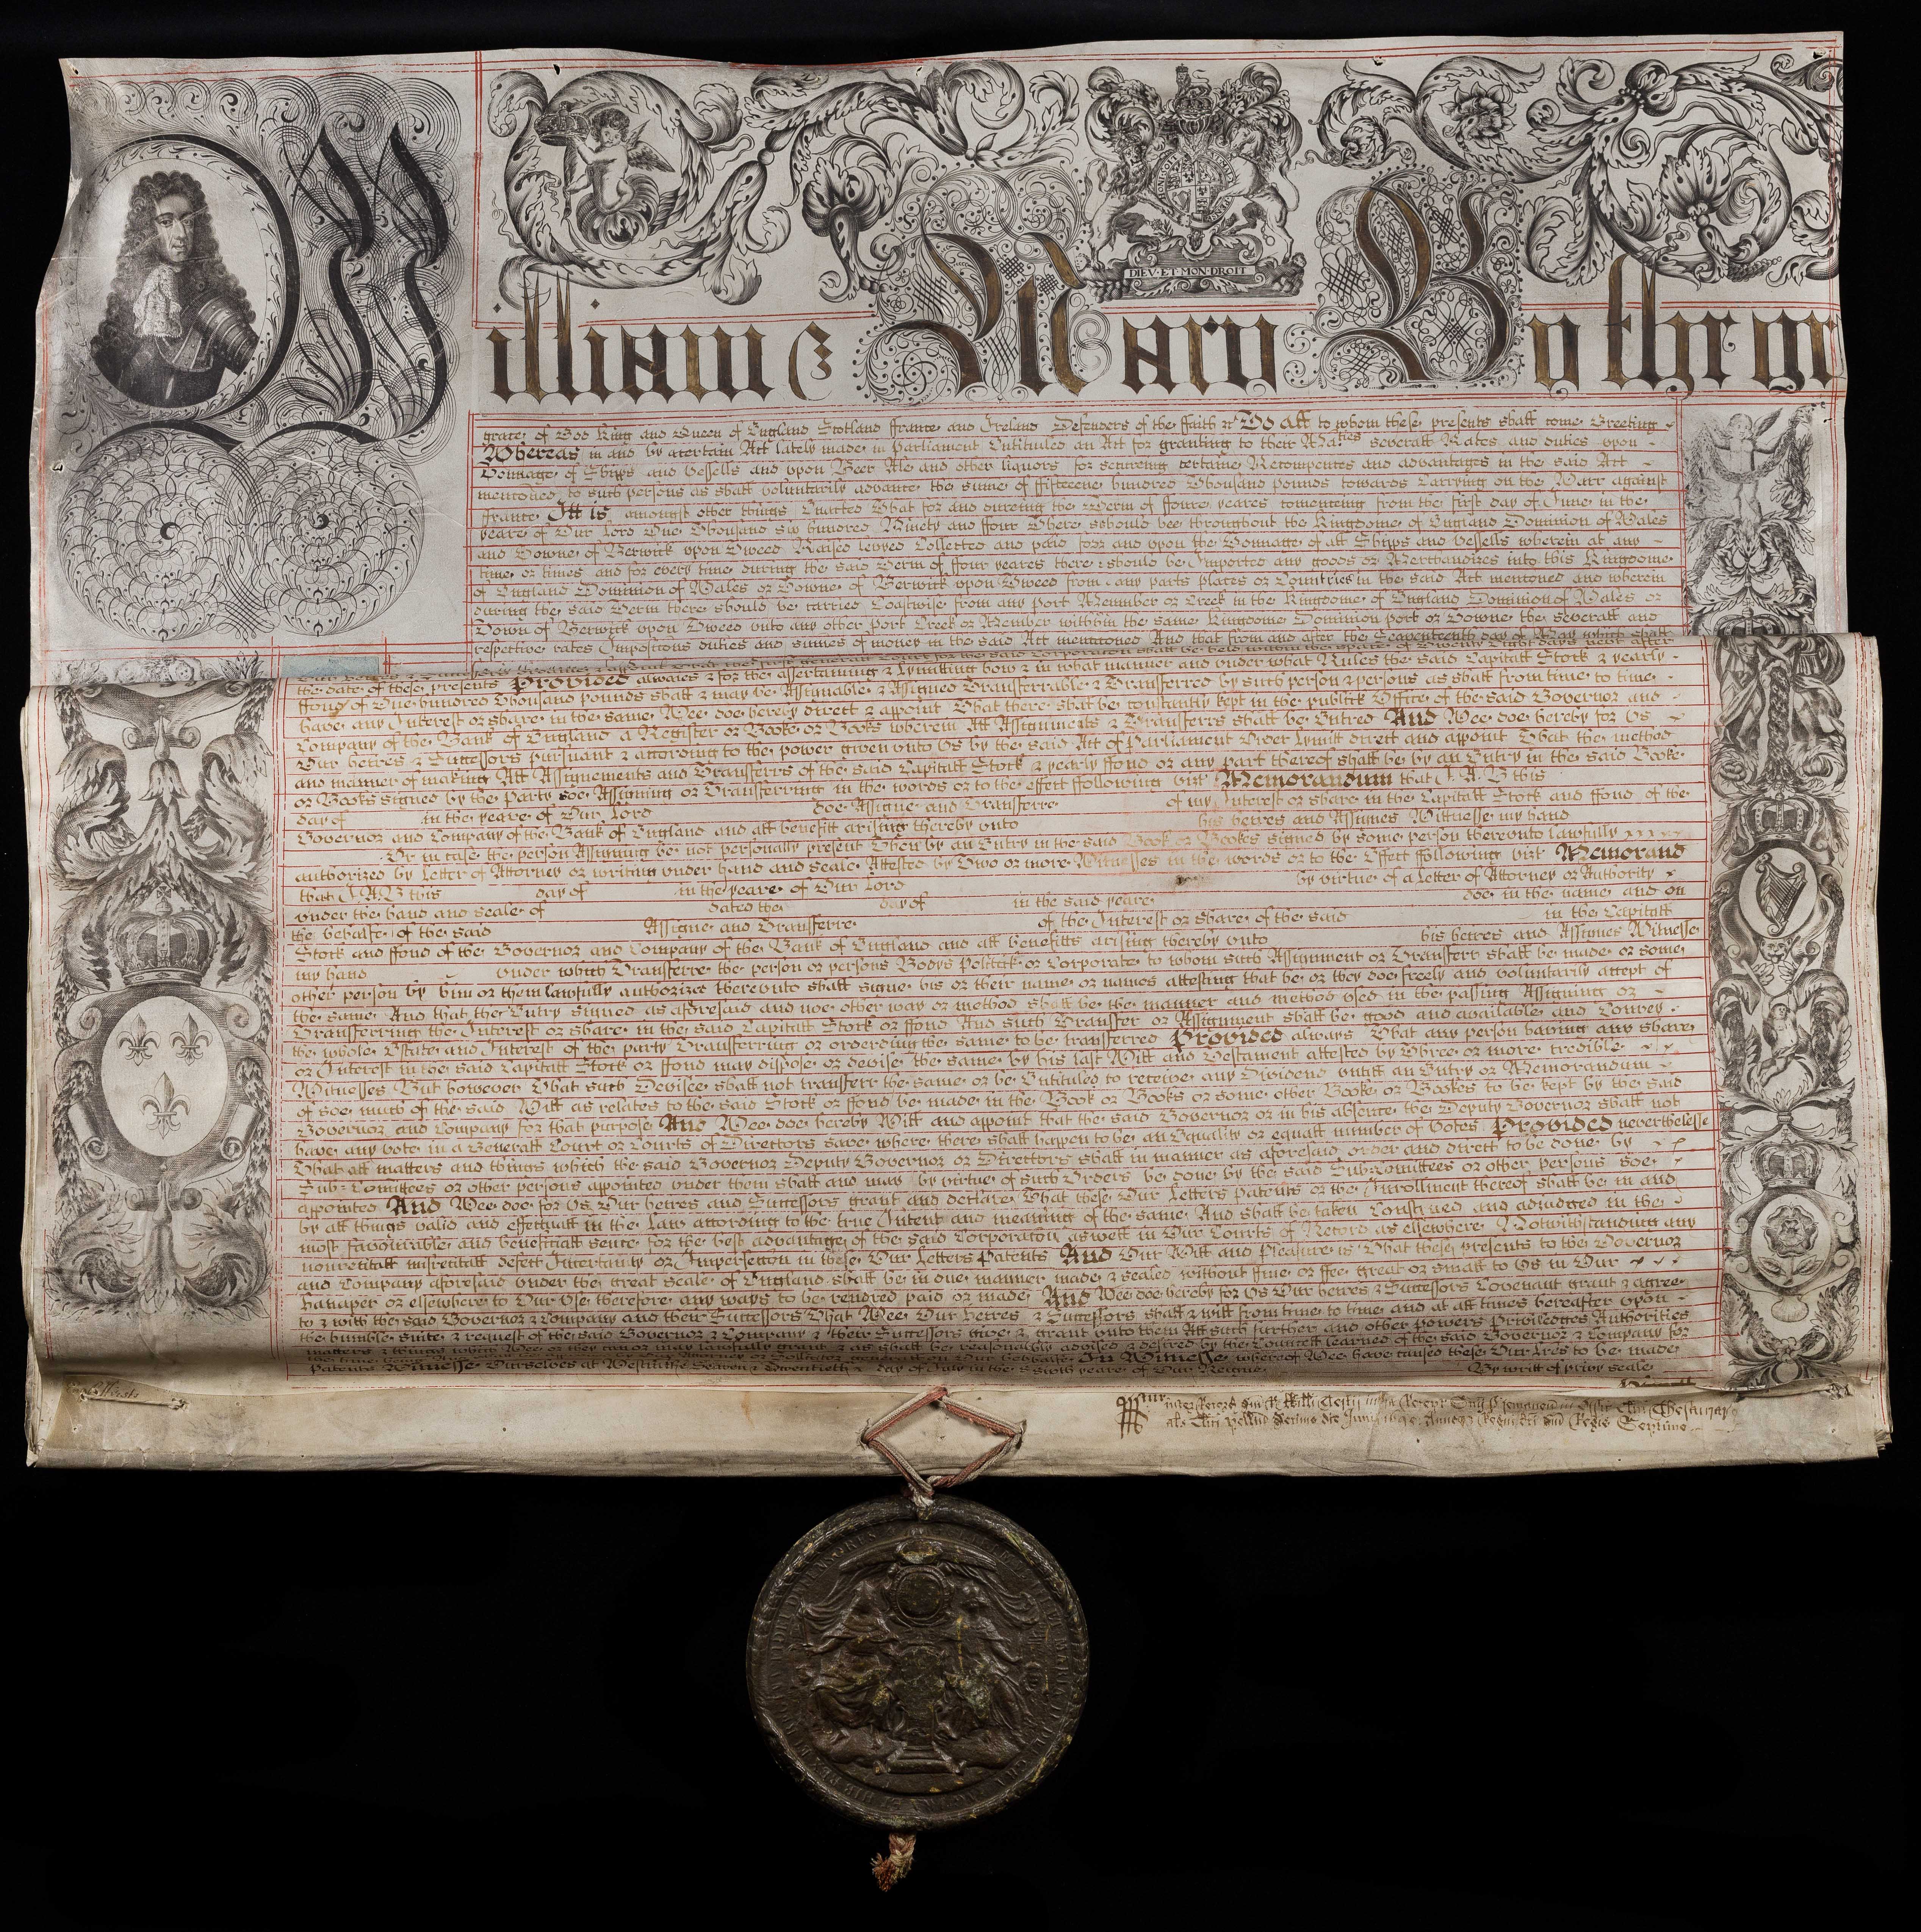 The original Bank of England Charter